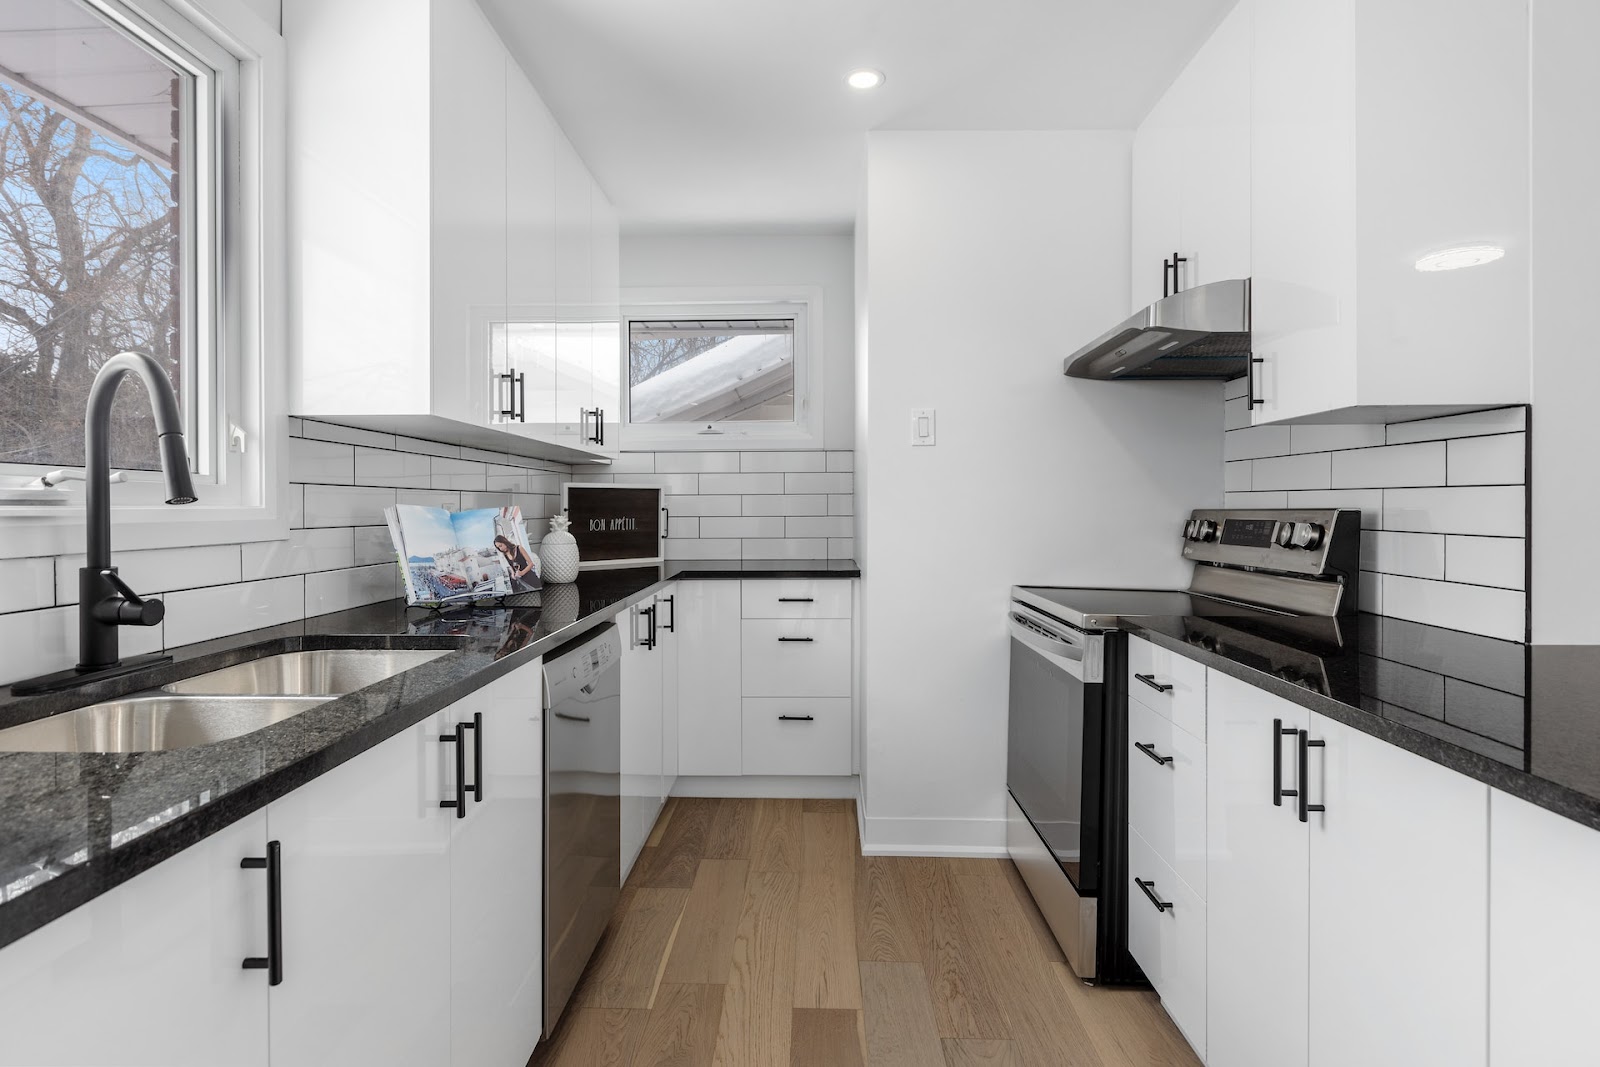 How To Clean Quartz Countertops - a black and white kitchen with quartz countertop